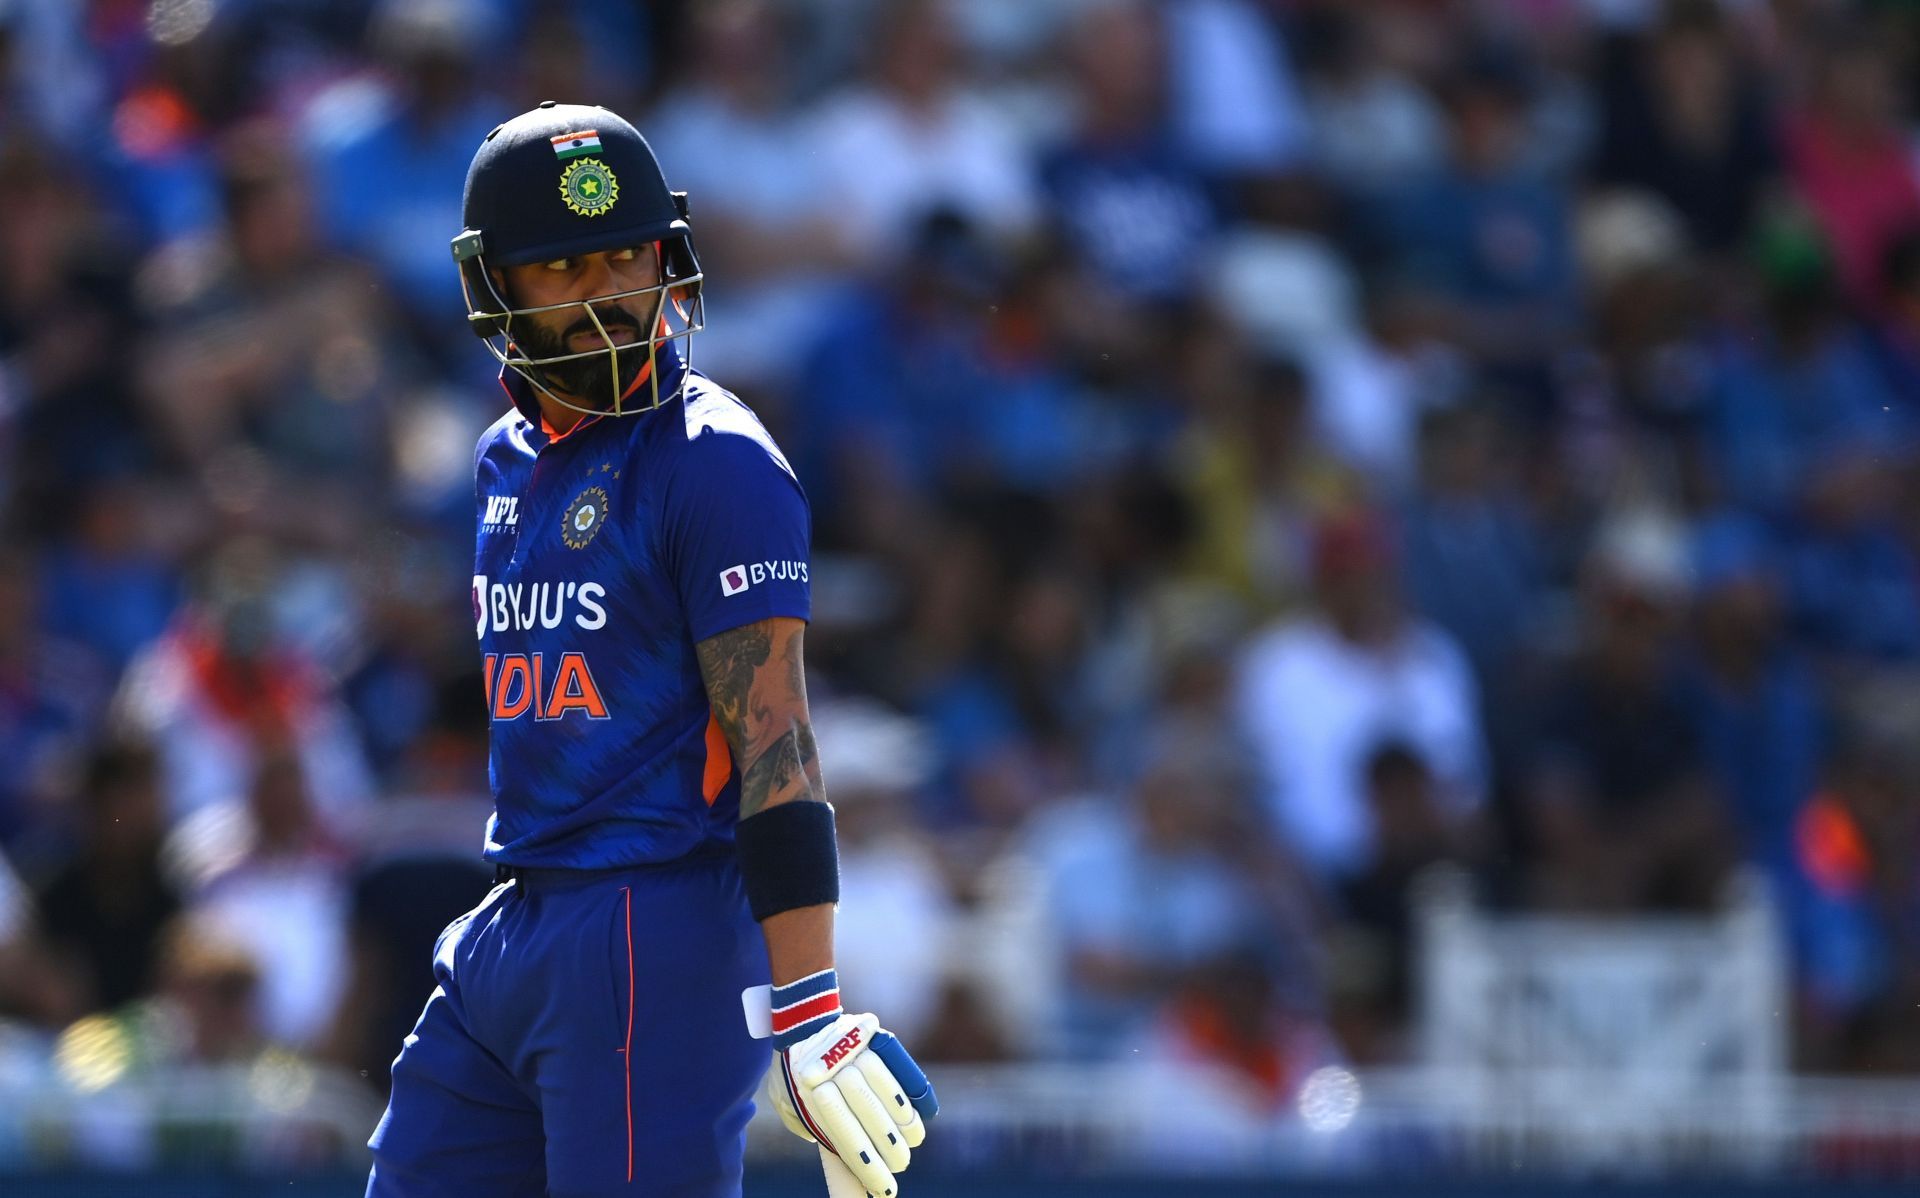 Virat Kohli fell cheaply again in the third T20I against England